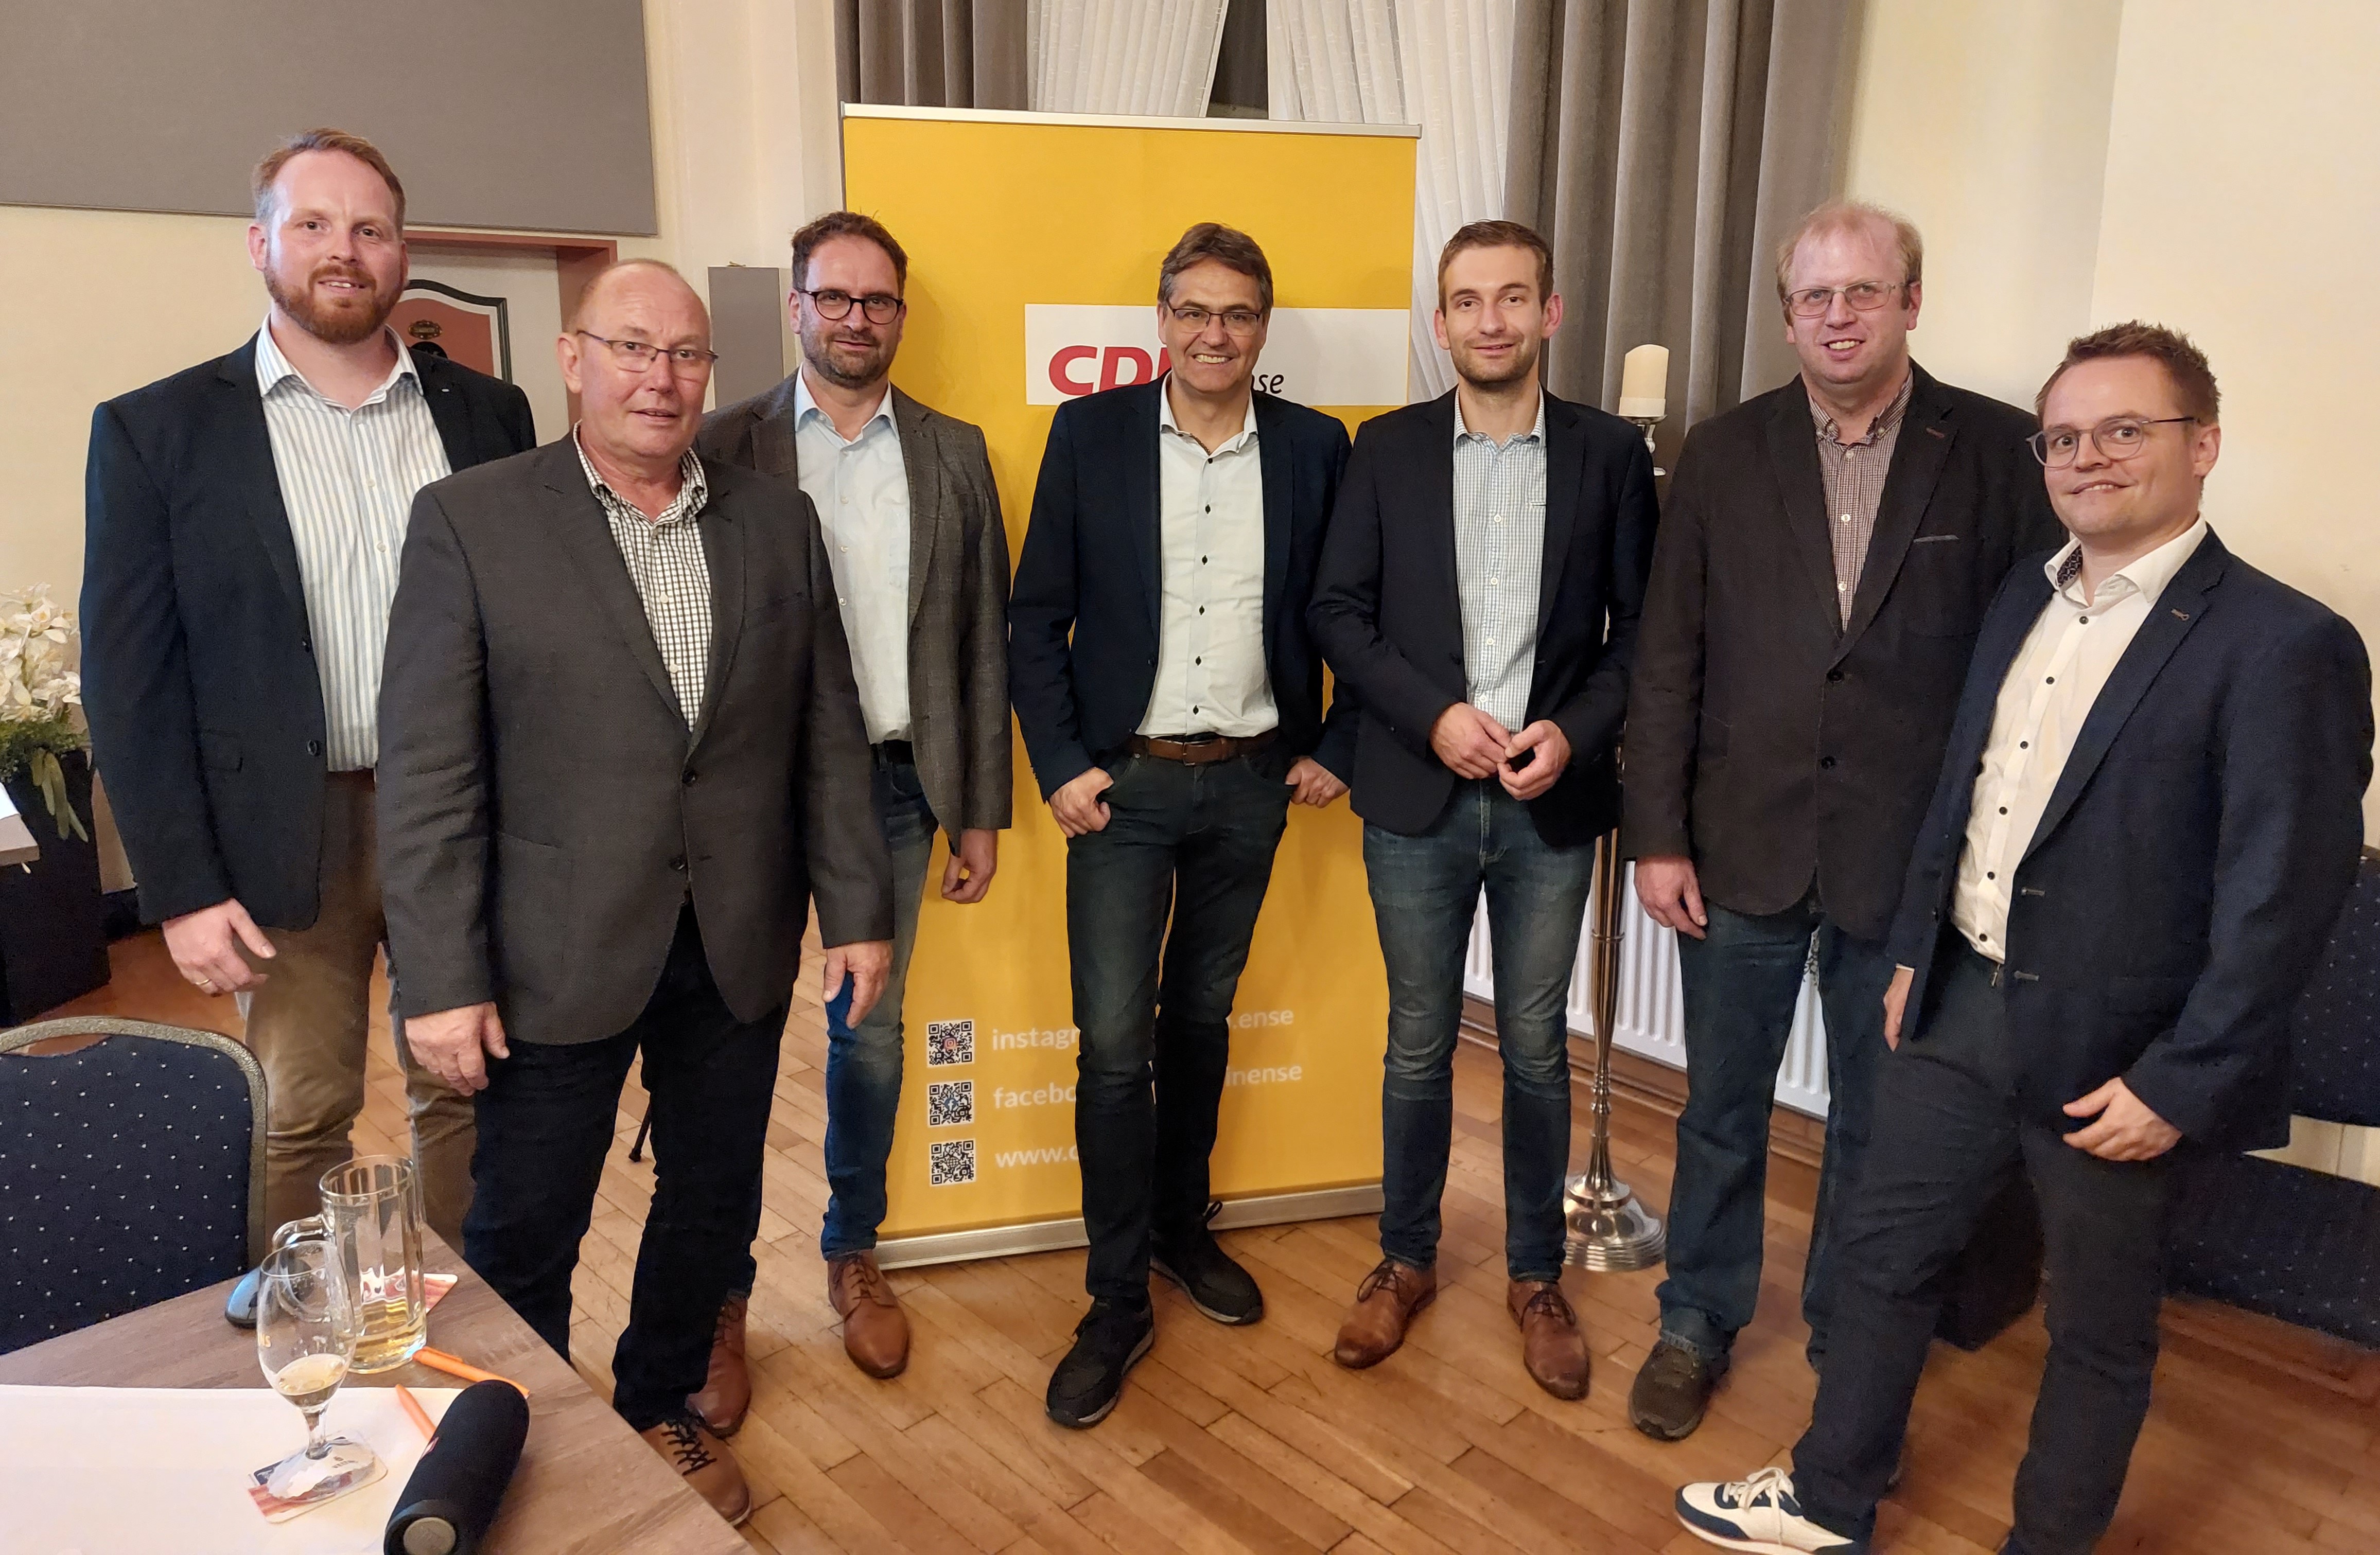 Foto v.l.n.r.: Tobias Frings, Armin Müller, Ralf Schmücker, Dr. Peter Liese, Simon Hennecke, Andreas Vonnahme, Thomas Dombrowsky